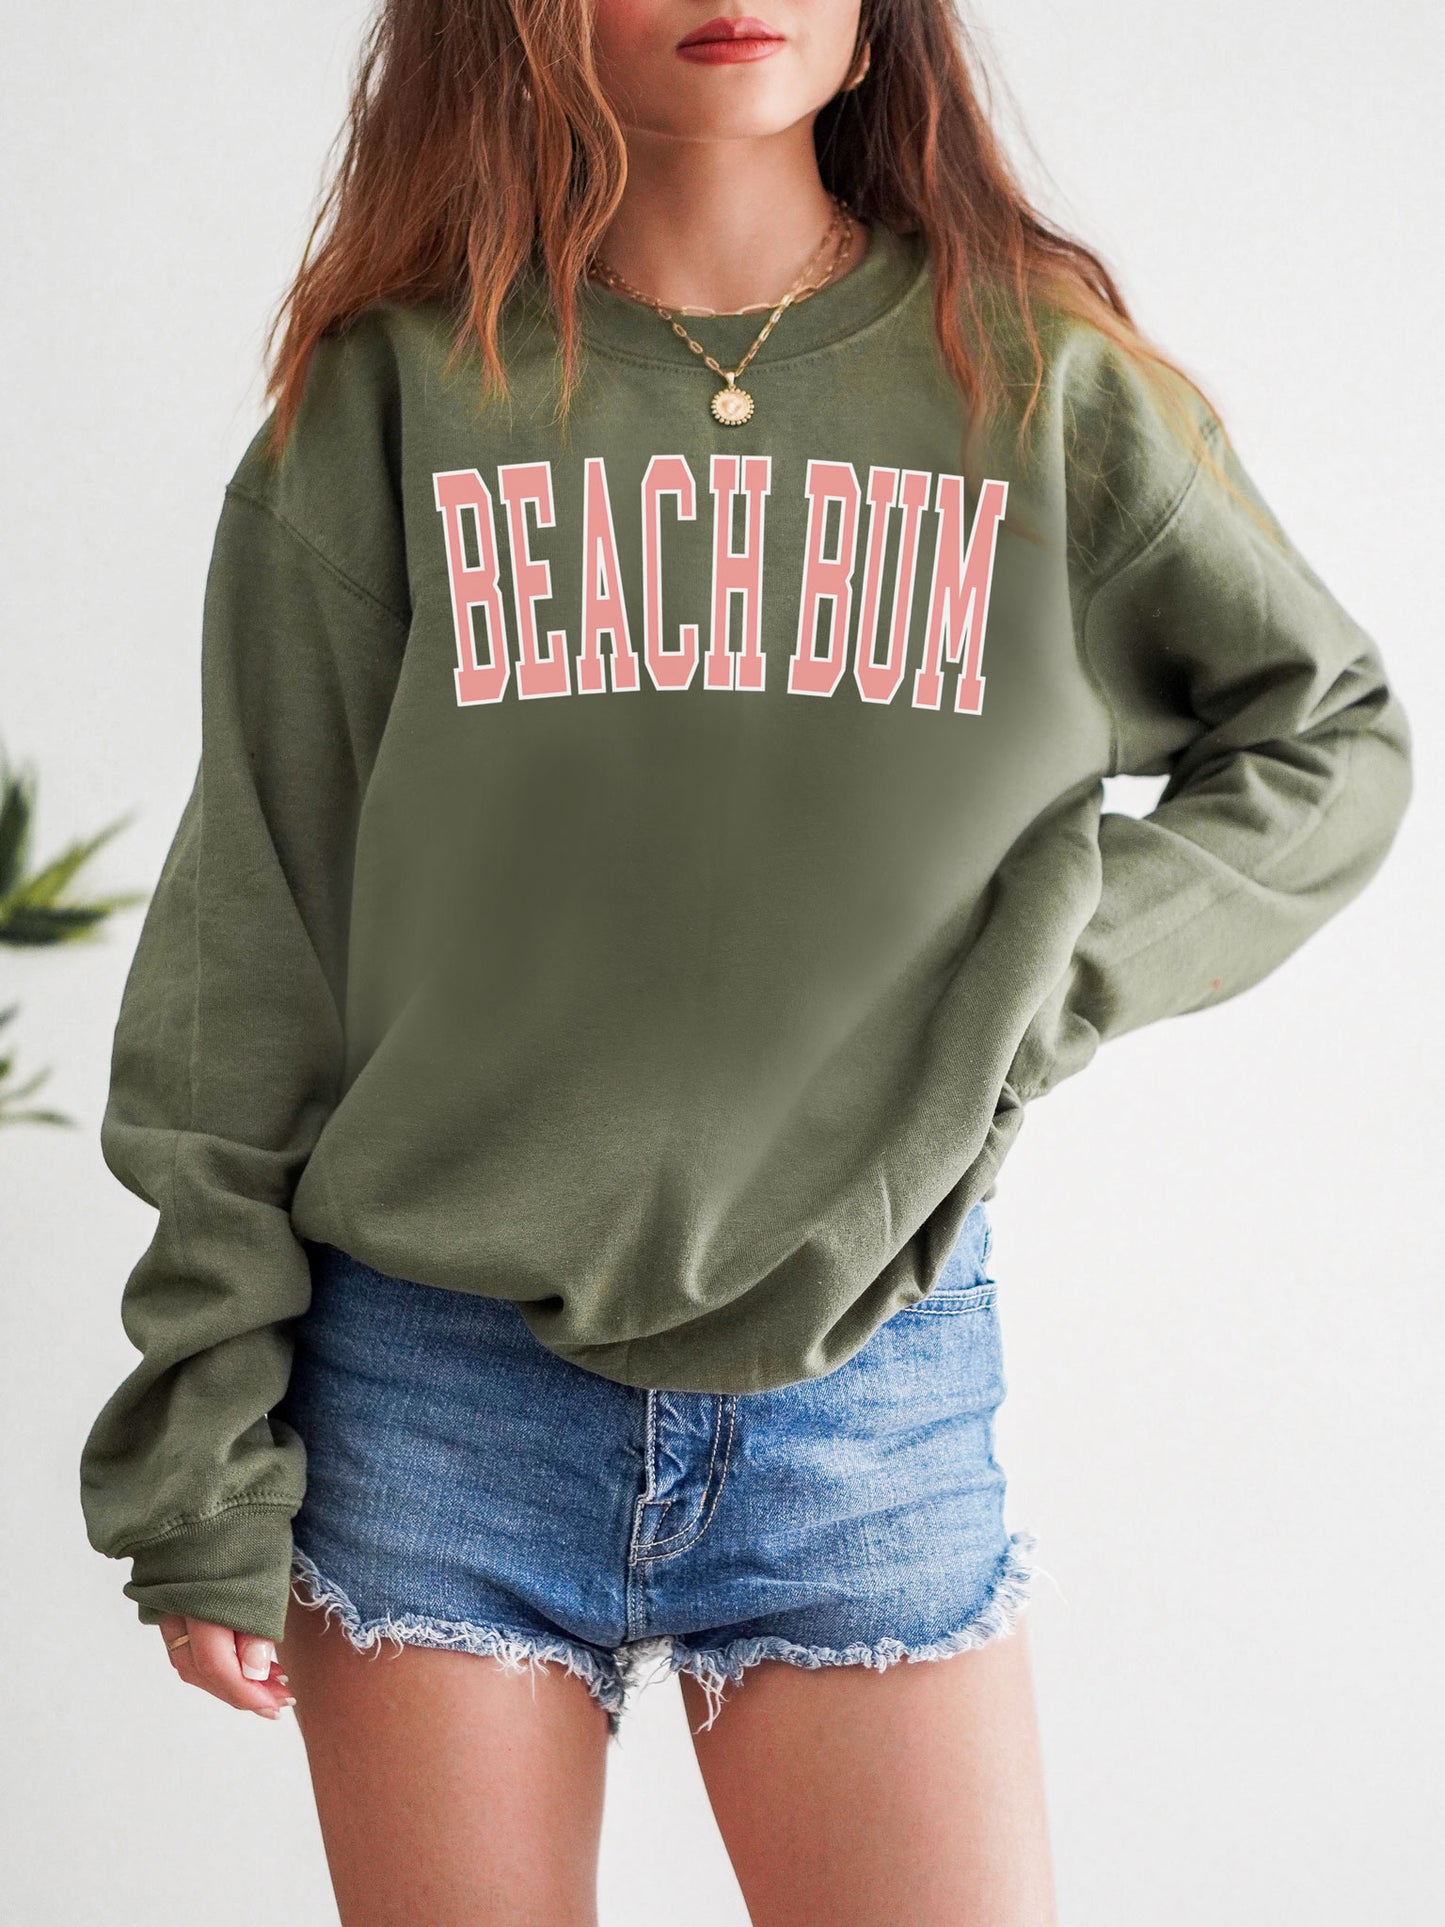 Beach Bum Sweatshirt - Peach Ink